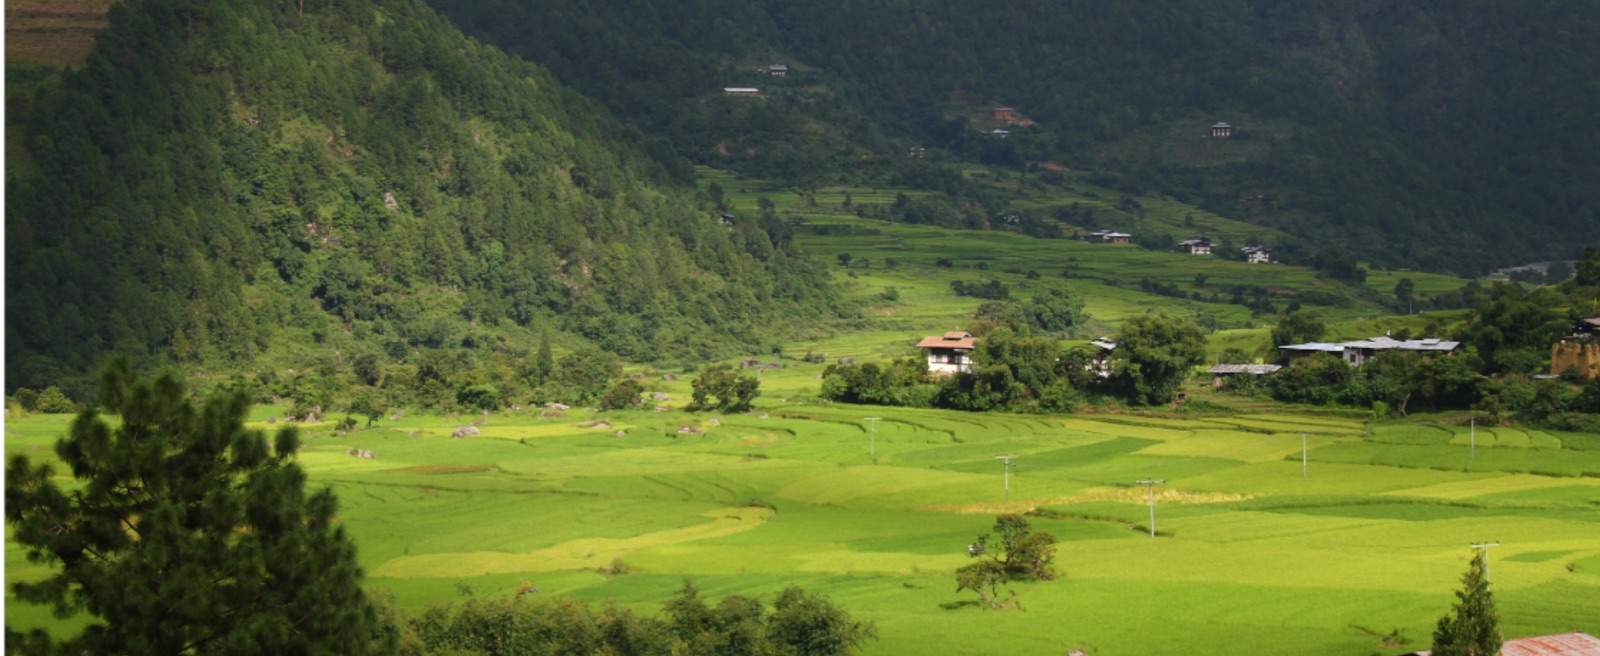 Bhutan trekking